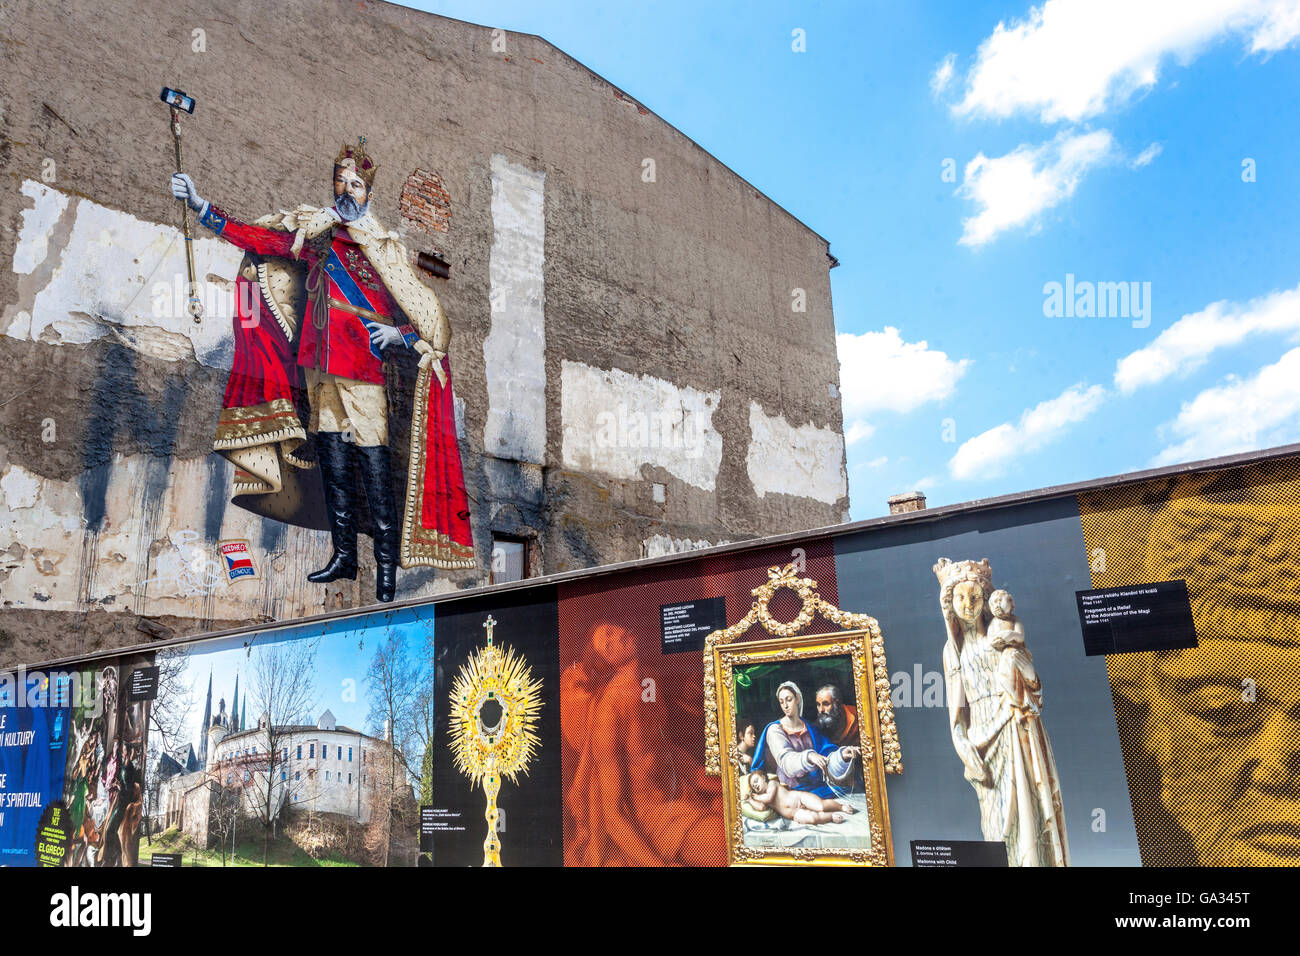 Olomouc monuments on billboards and street art on the wall, Olomouc, South Moravia, Czech Republic Stock Photo